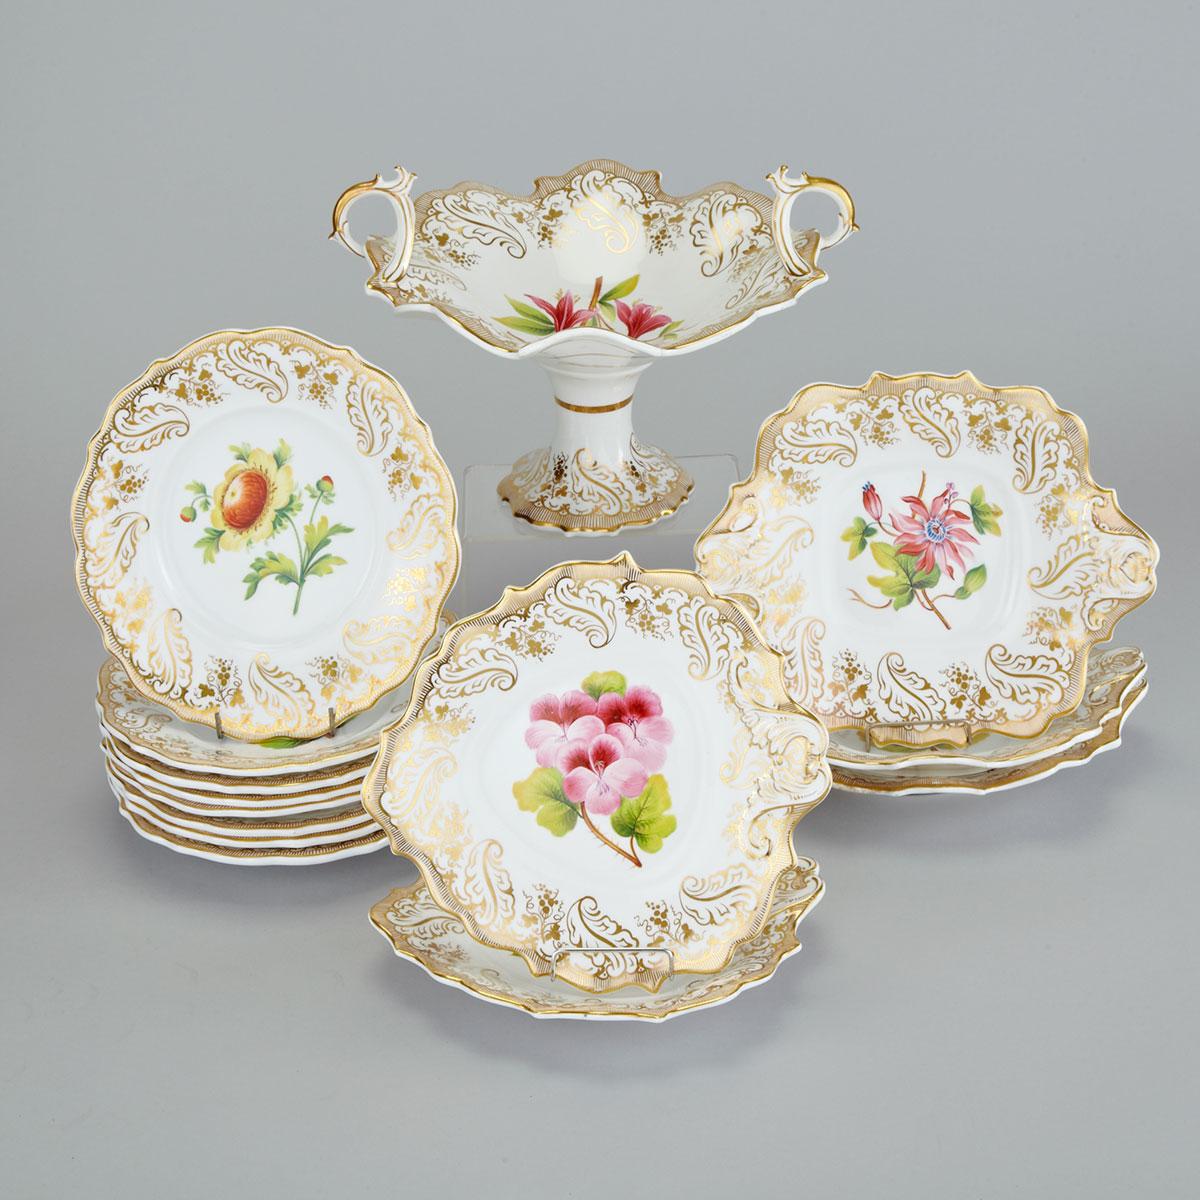 English Porcelain Botanical Style Dessert Service, c.1840